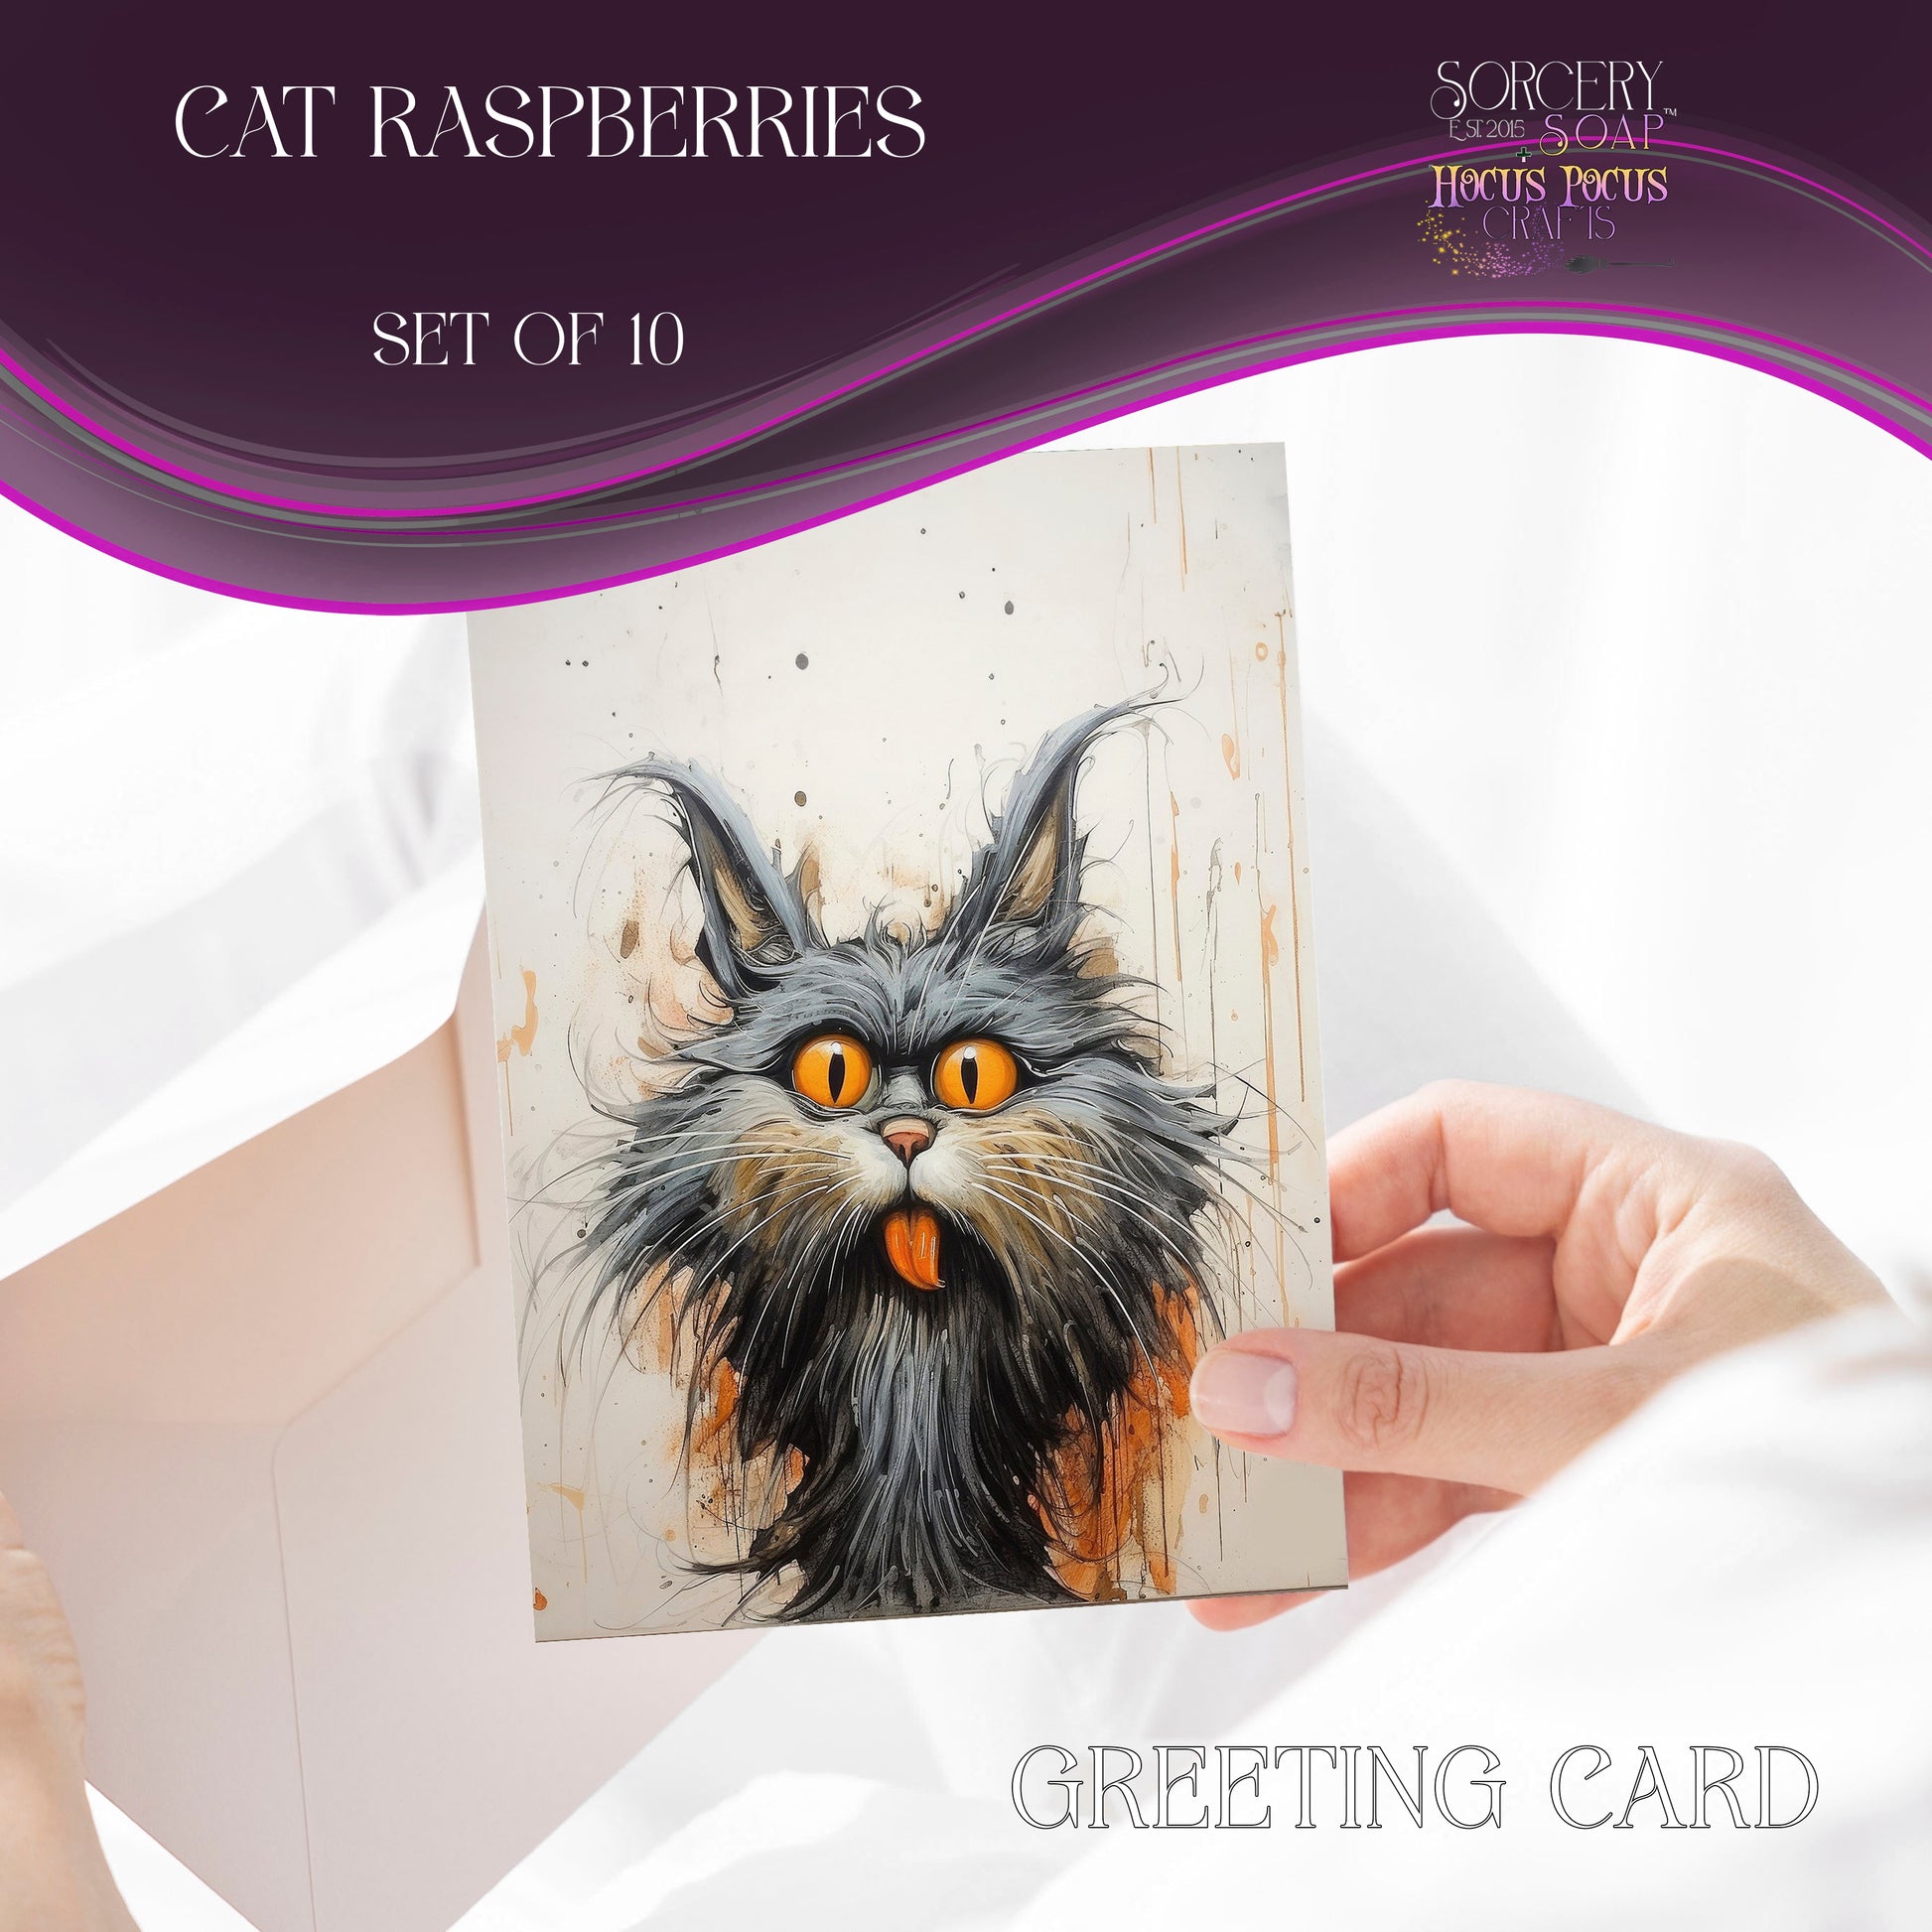 Cat Raspberries Cards